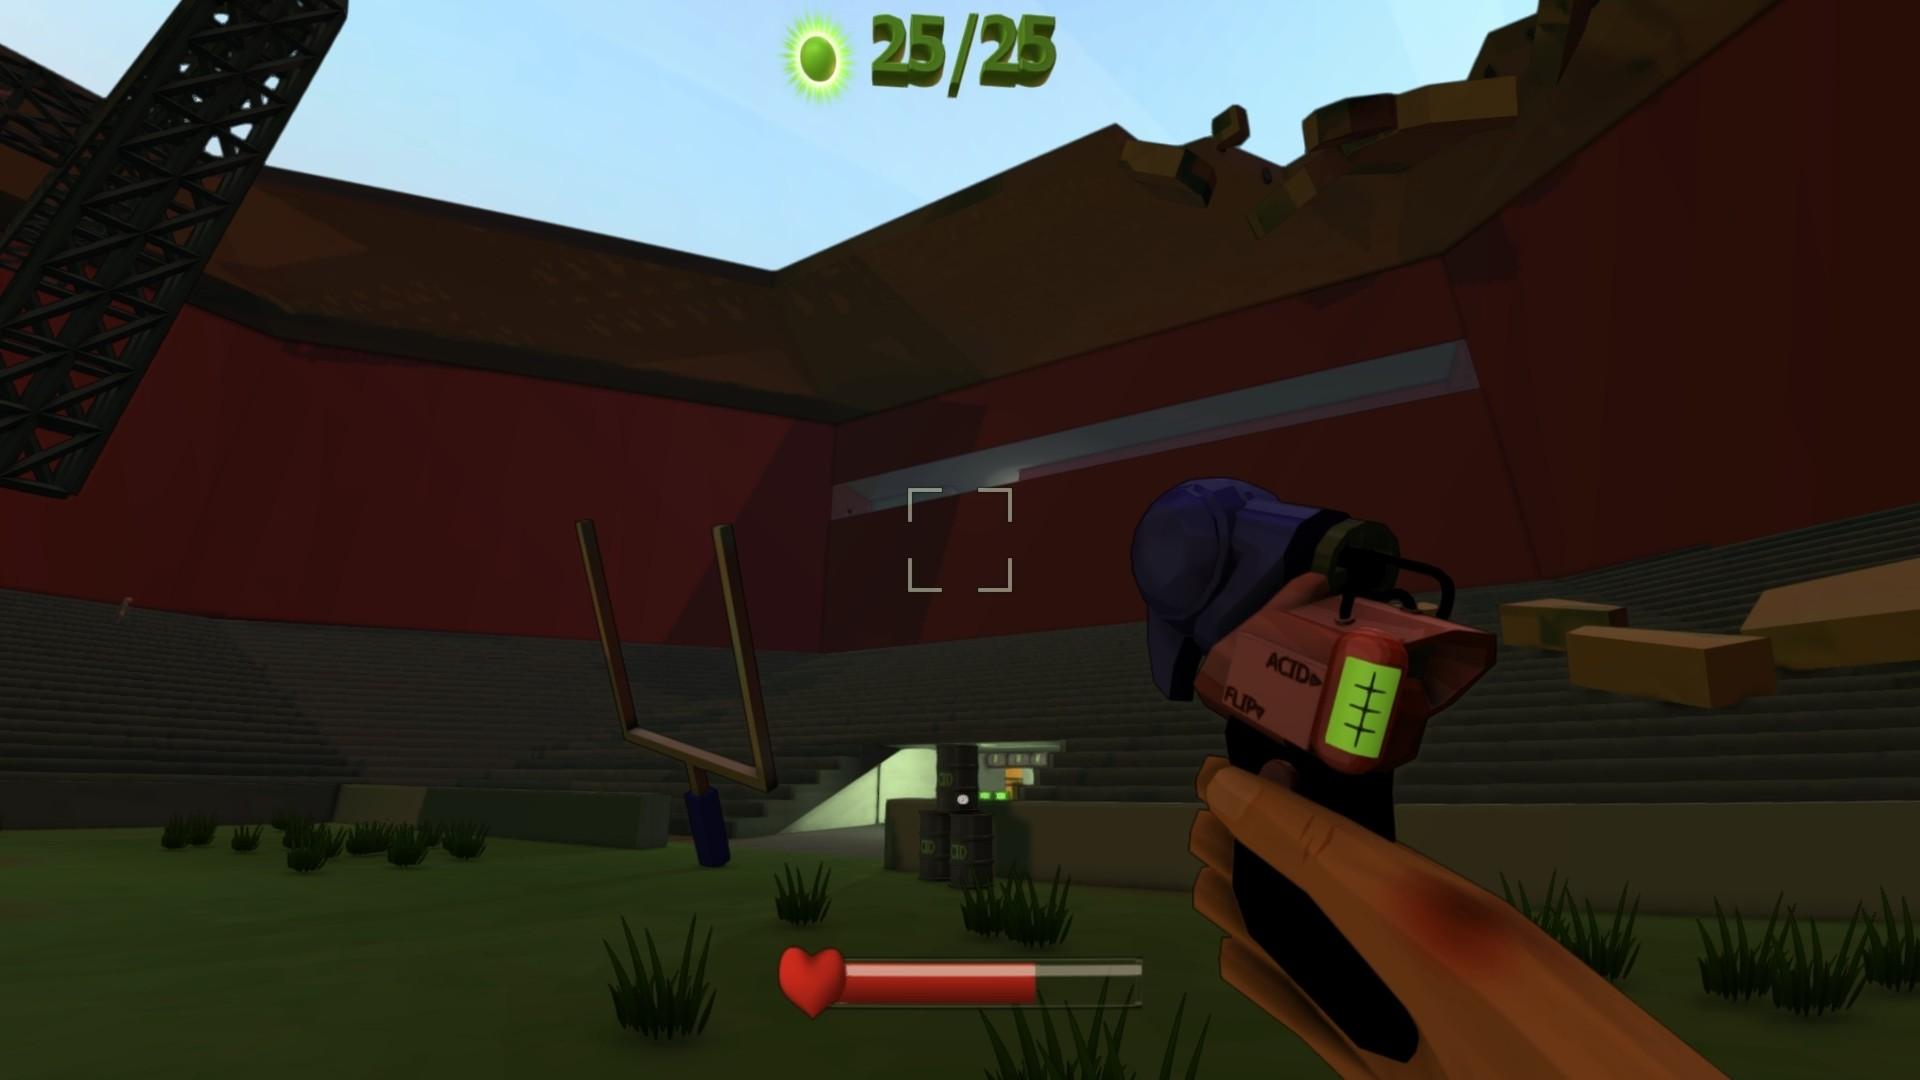 Screenshot №2 from game Acid Flip